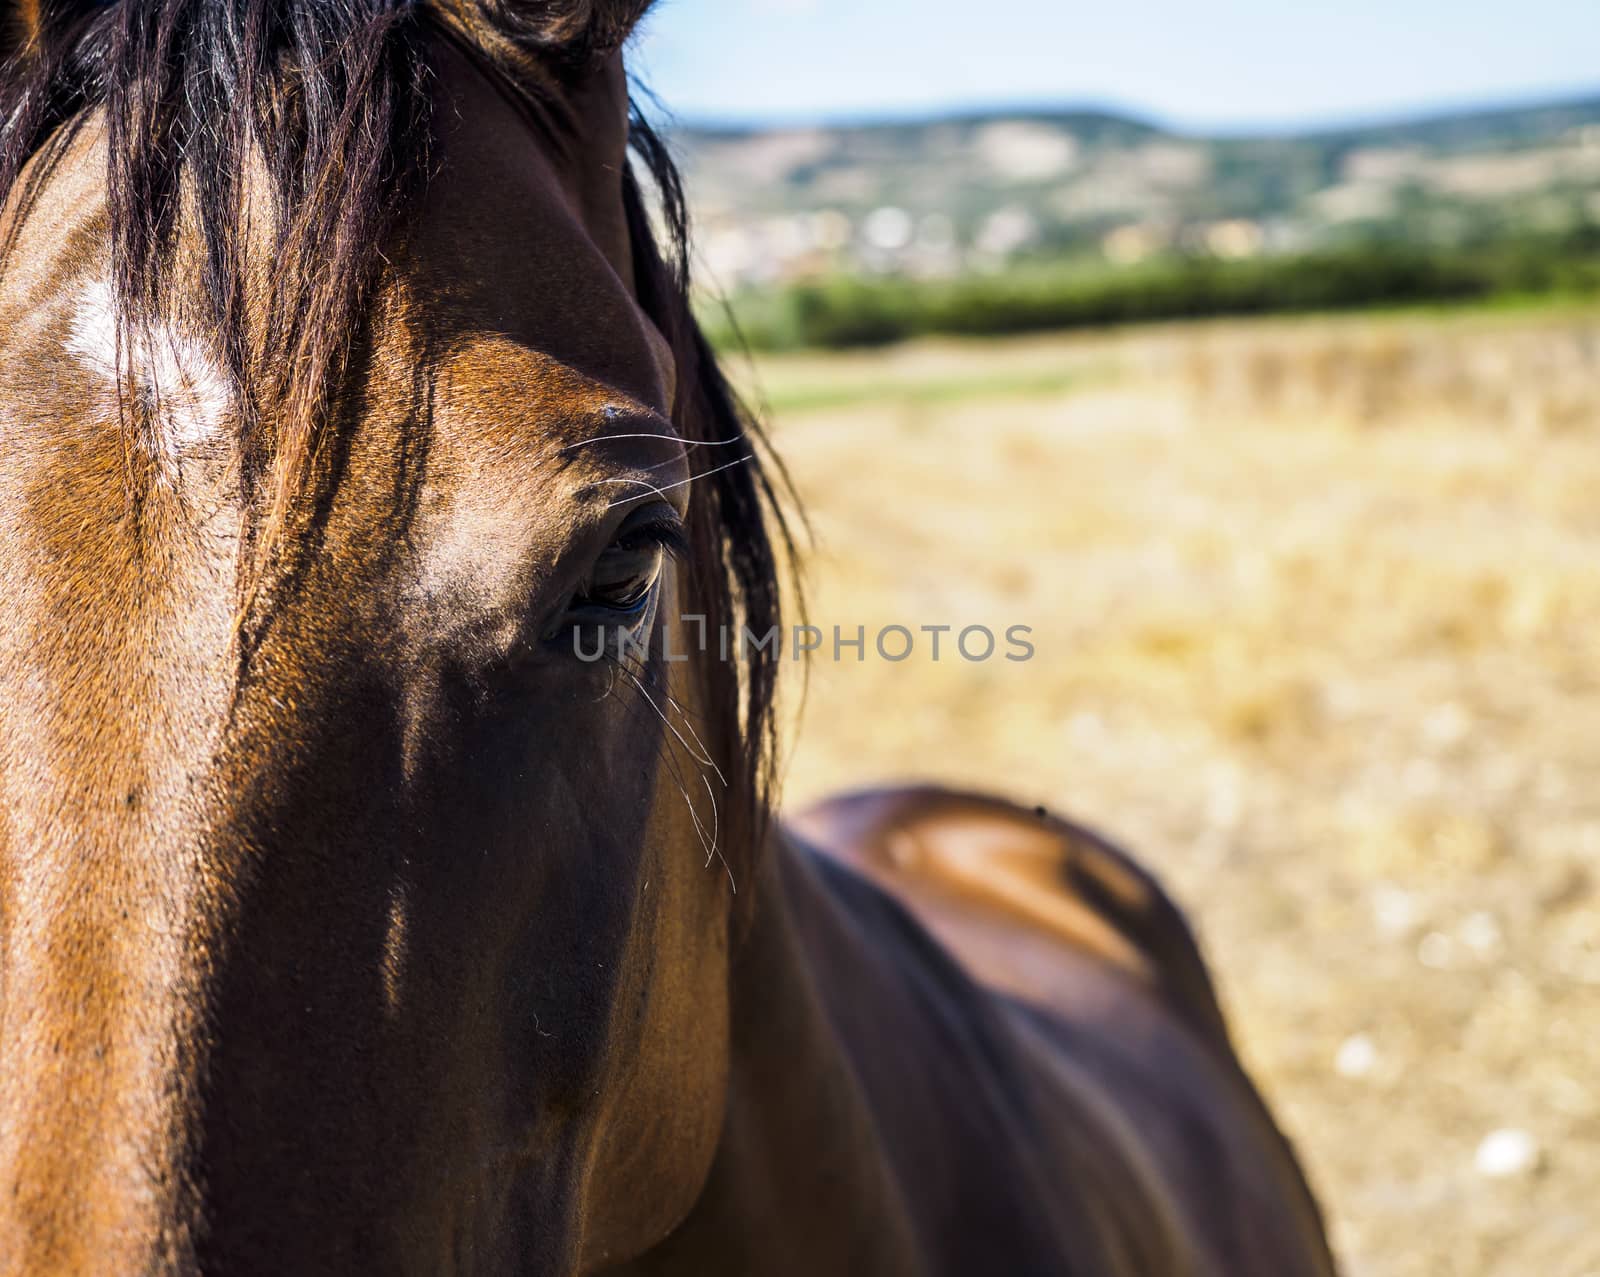 Italian horse while looking toward the lens